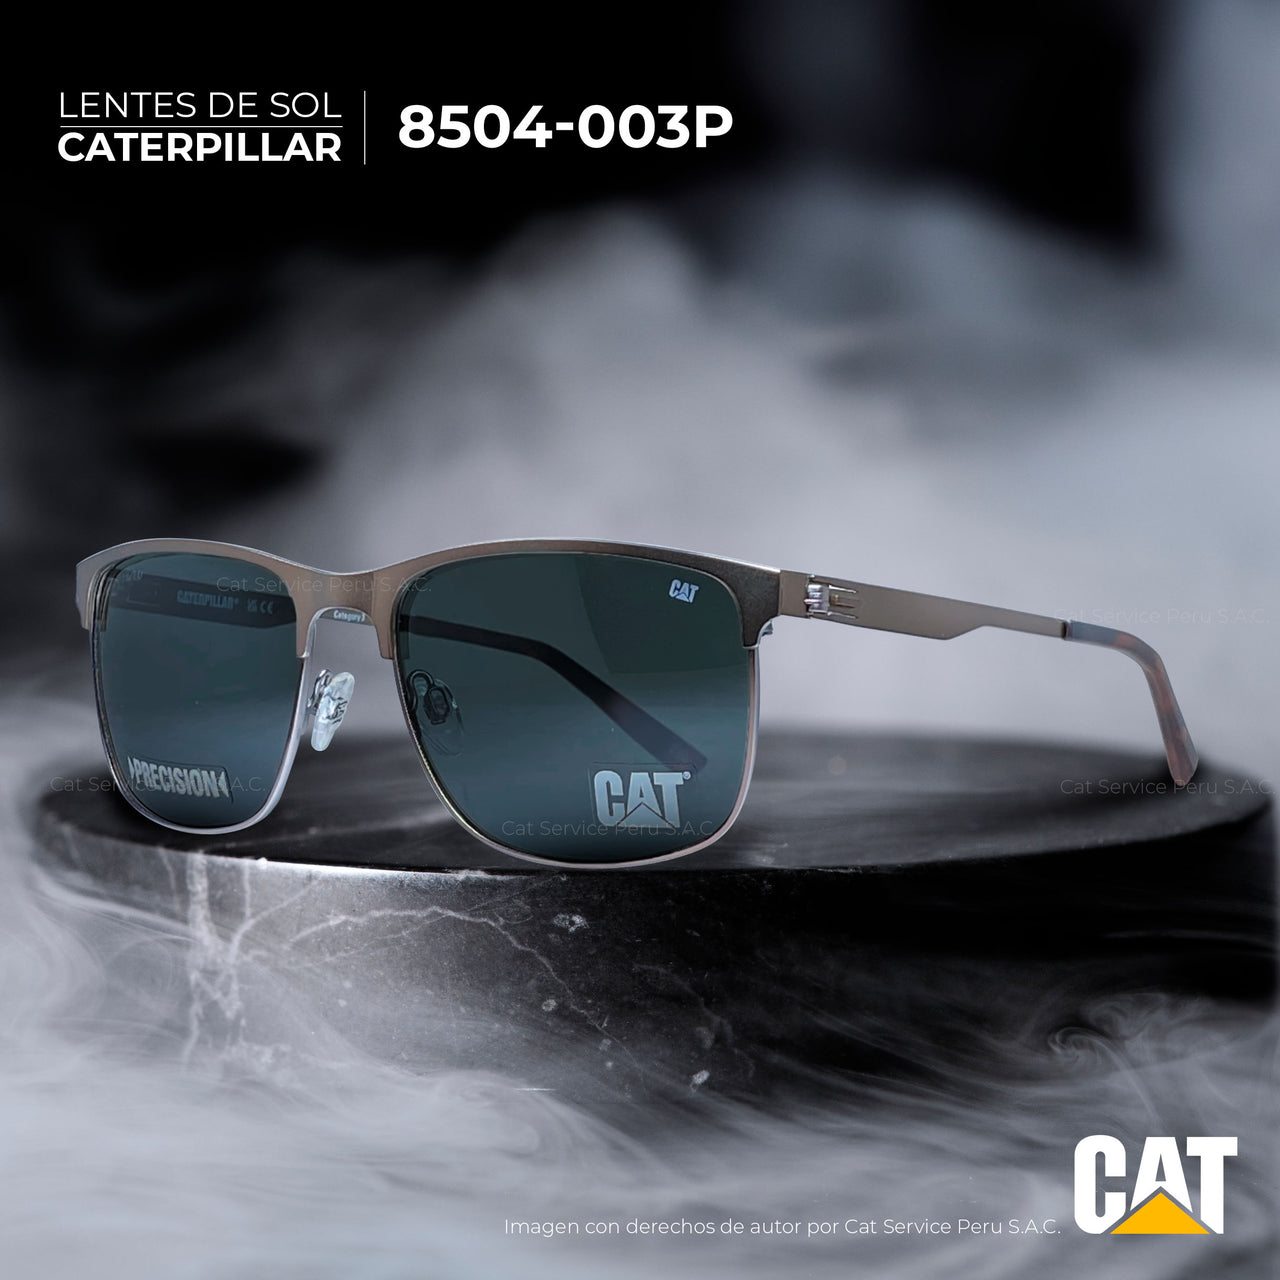 Cat CPS-8504-003P Polarized Black Moons Sunglasses 